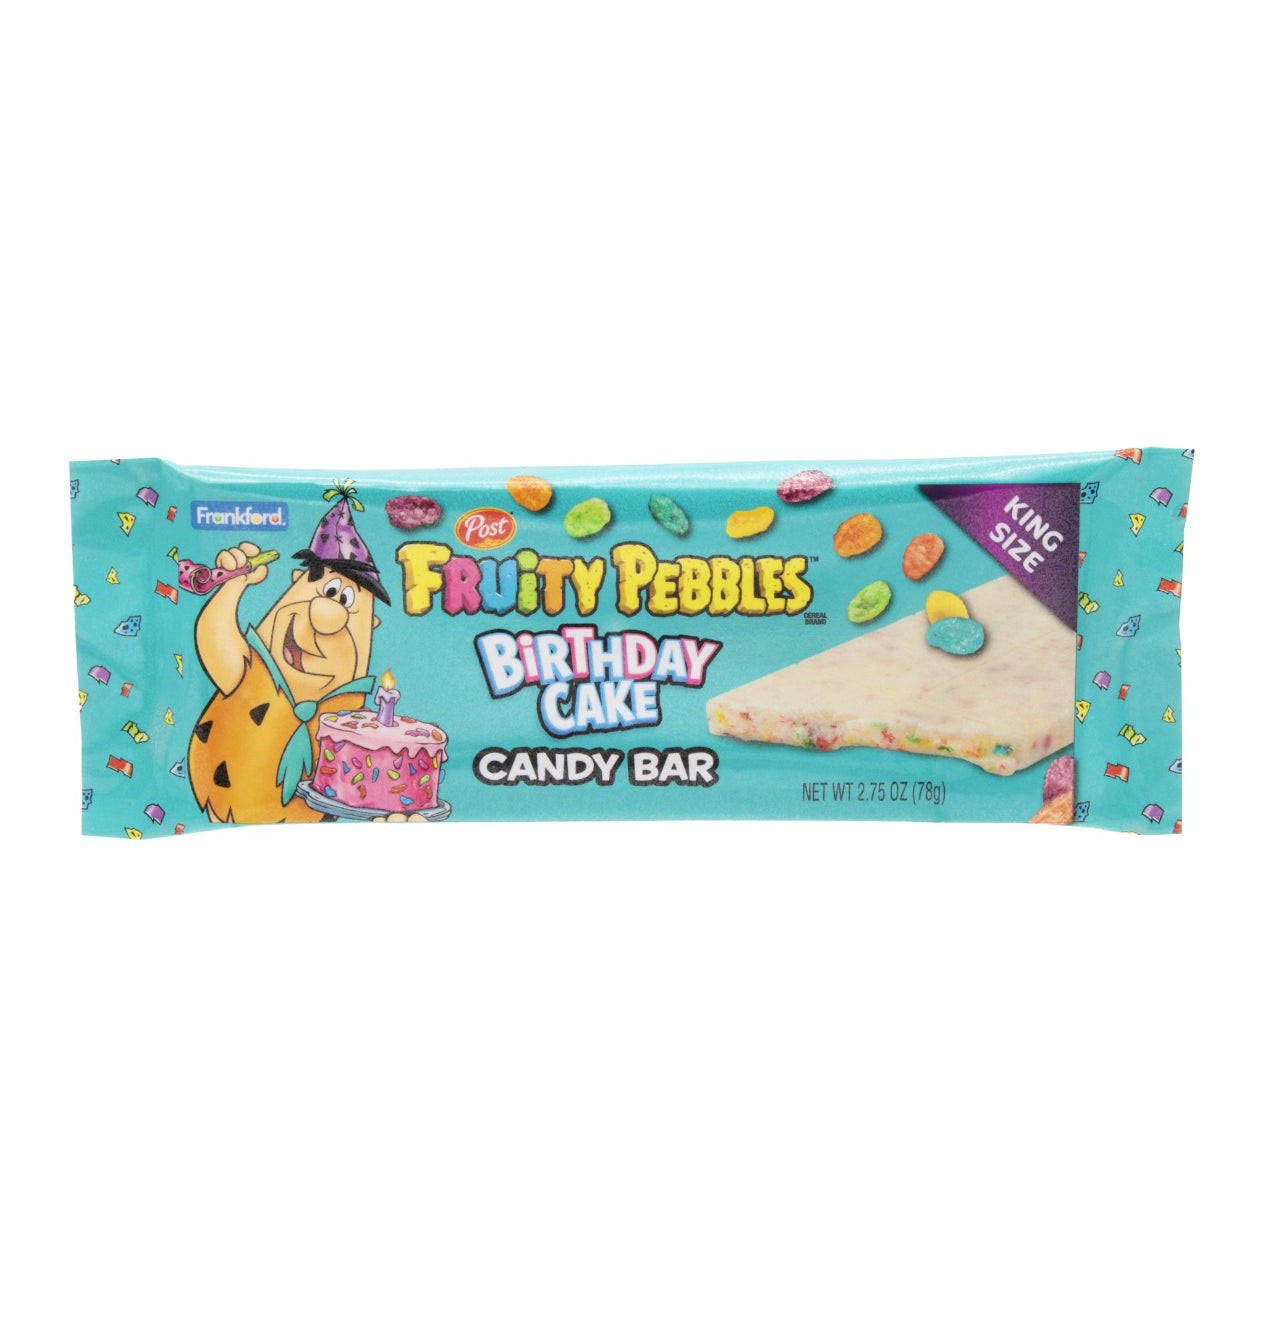 Fruity Pebbles Candy Bar, Birthday Cake, King Size - 2.75 oz